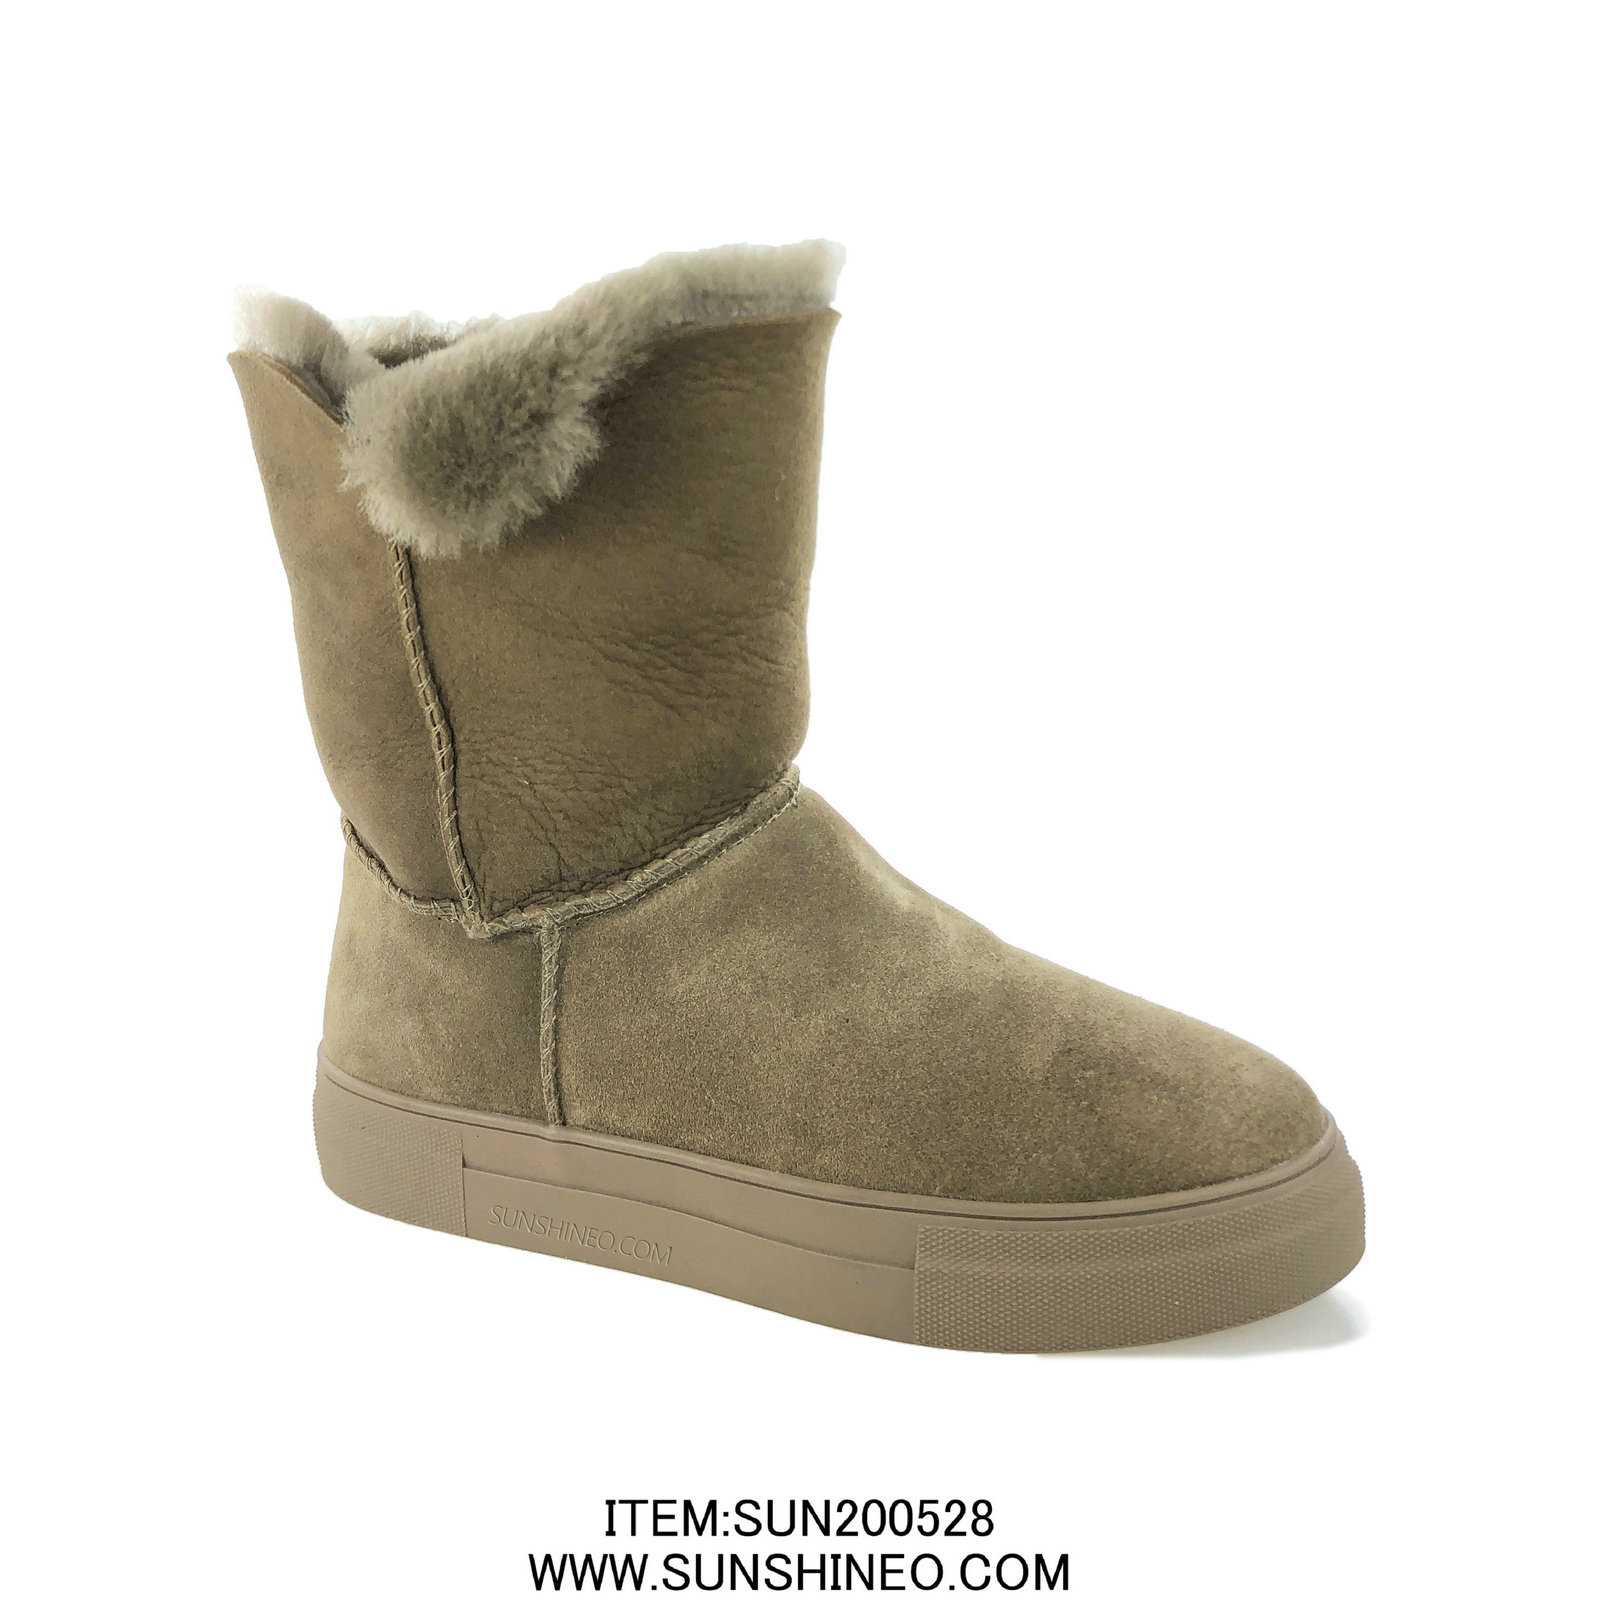 SUN200529 leather winter fur boot - Sunshineo shoe factory